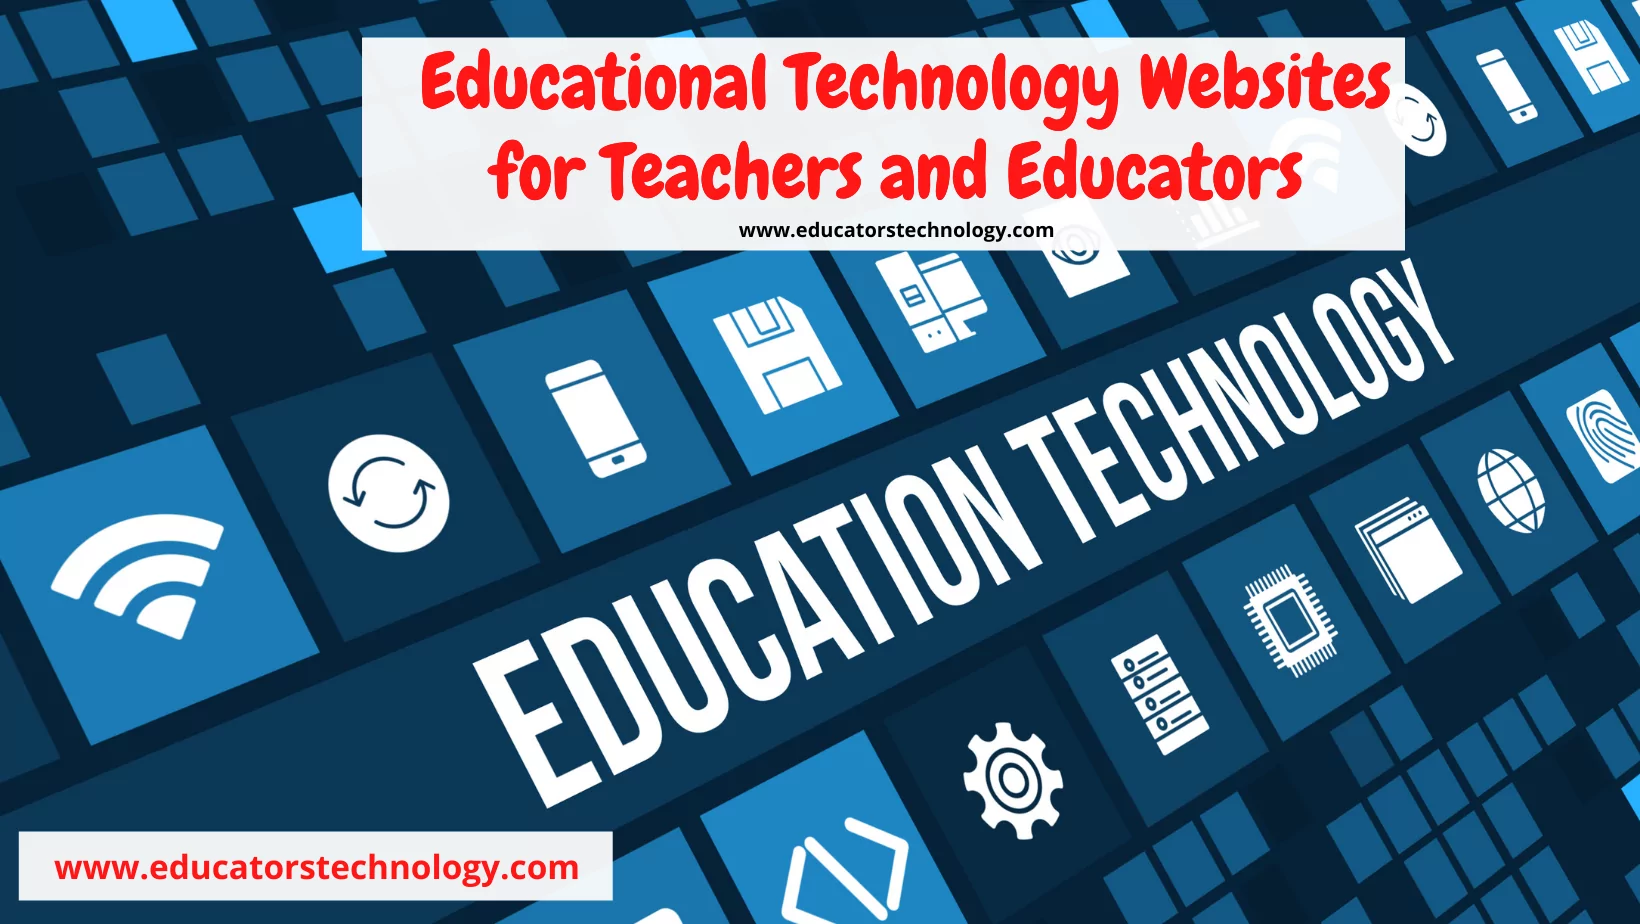 Educational technology websites